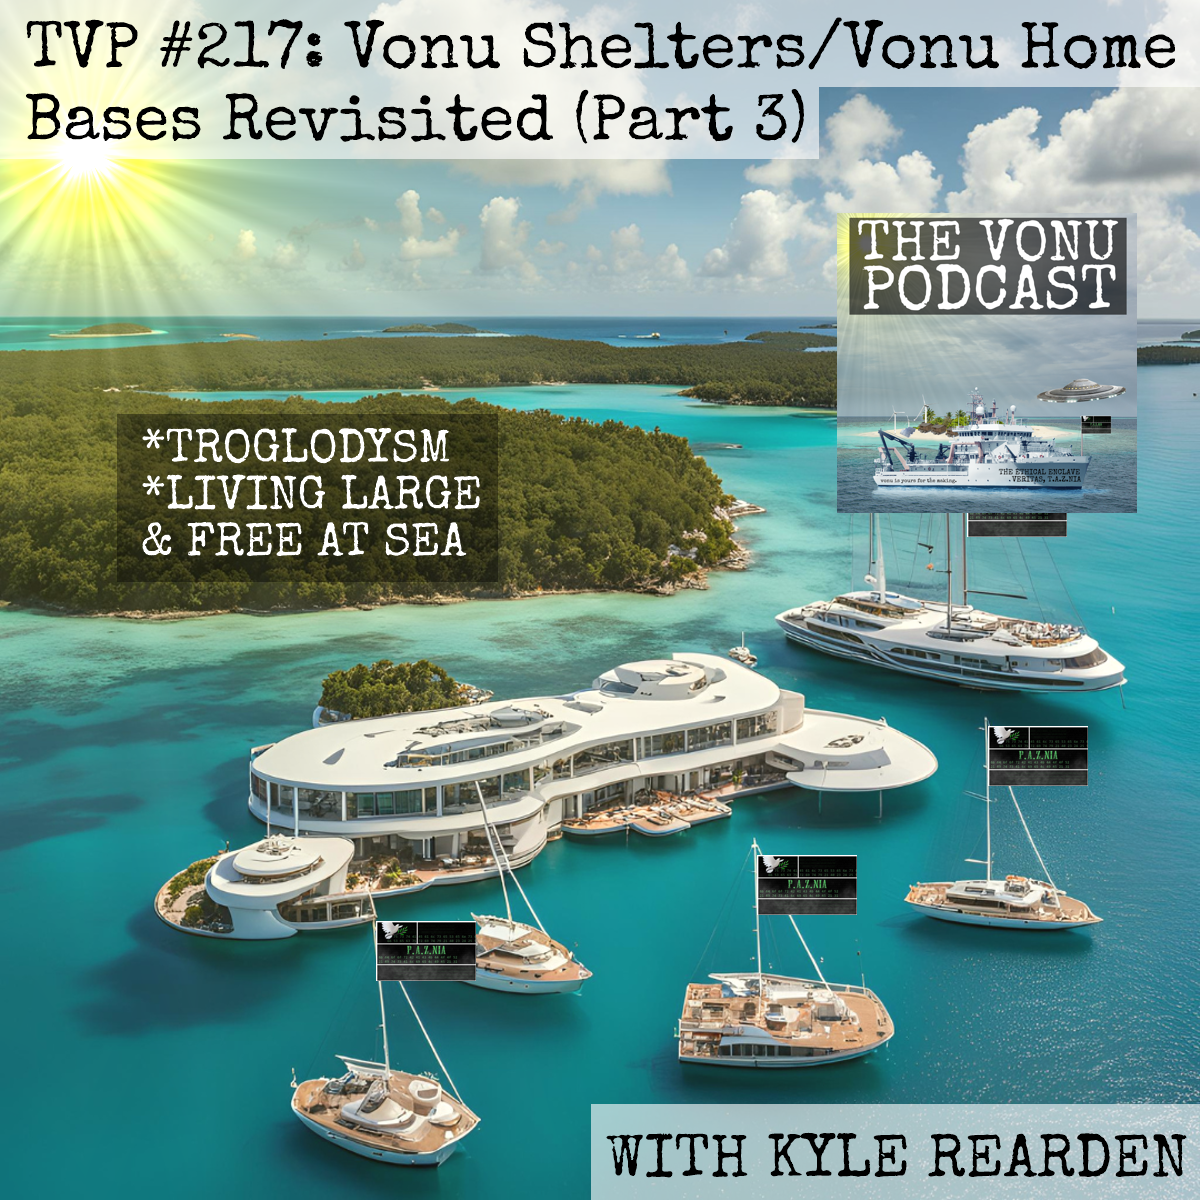 TVP #217: Vonu Shelters/Vonu Home Bases Revisited (Part 3) w/ Kyle Rearden